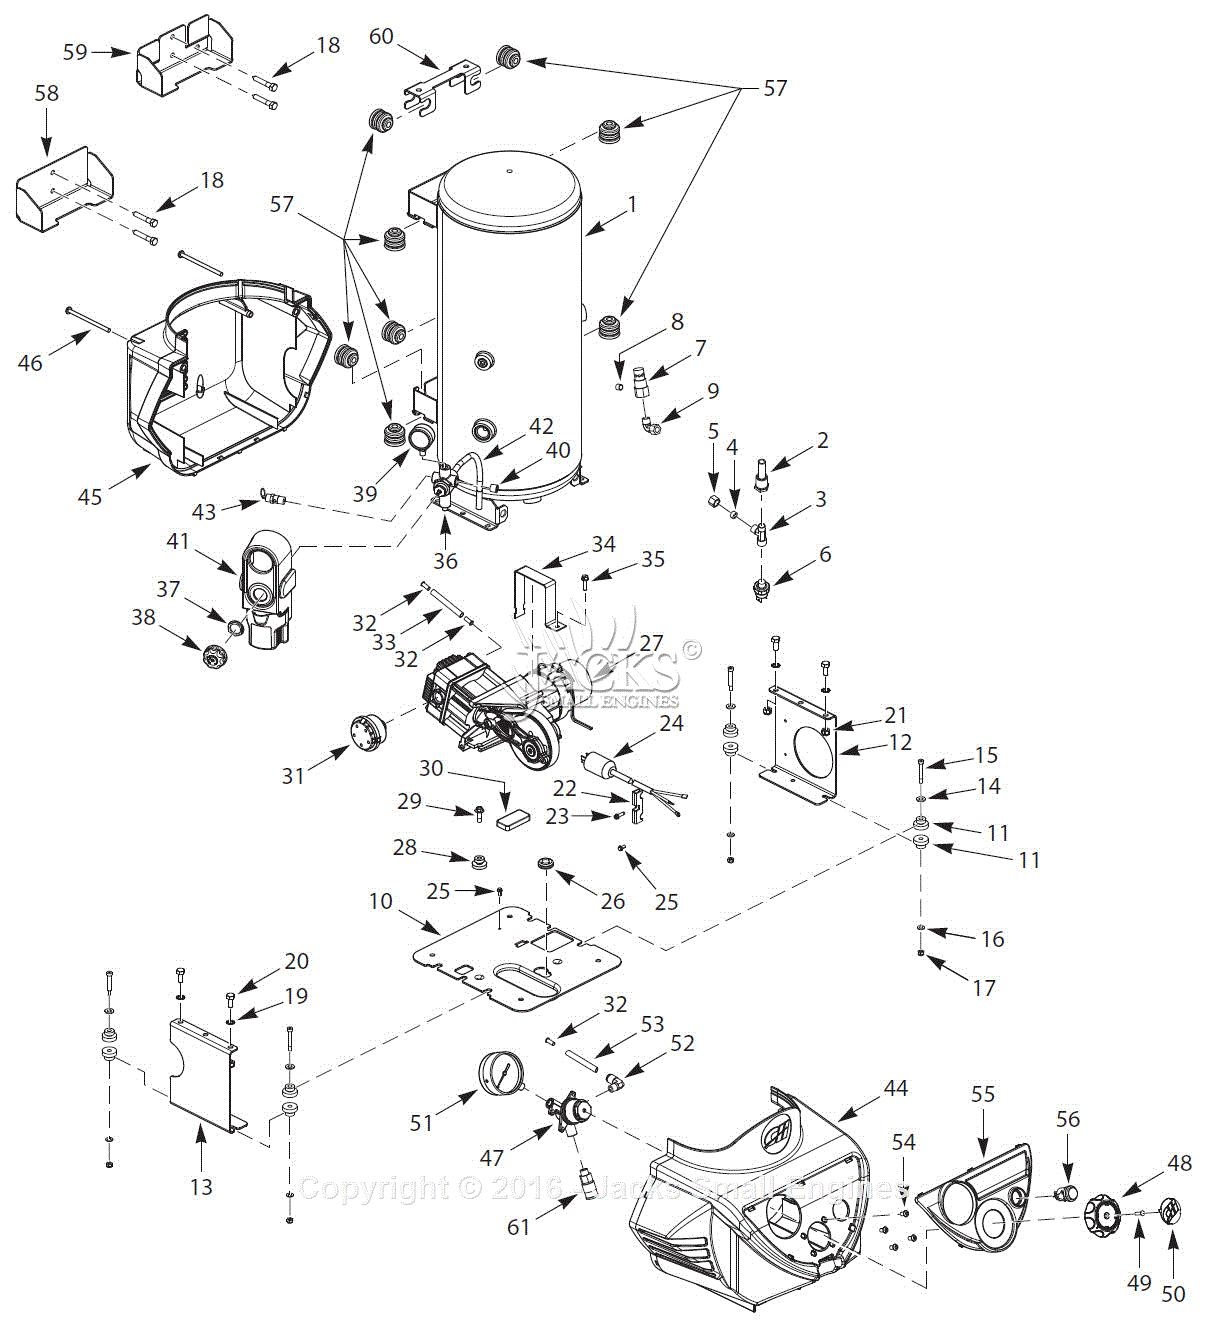 Campbell Hausfeld WL675000 Parts Diagram for Air-Compressor Parts Capacitor Motor Wiring Diagrams Jacks Small Engines